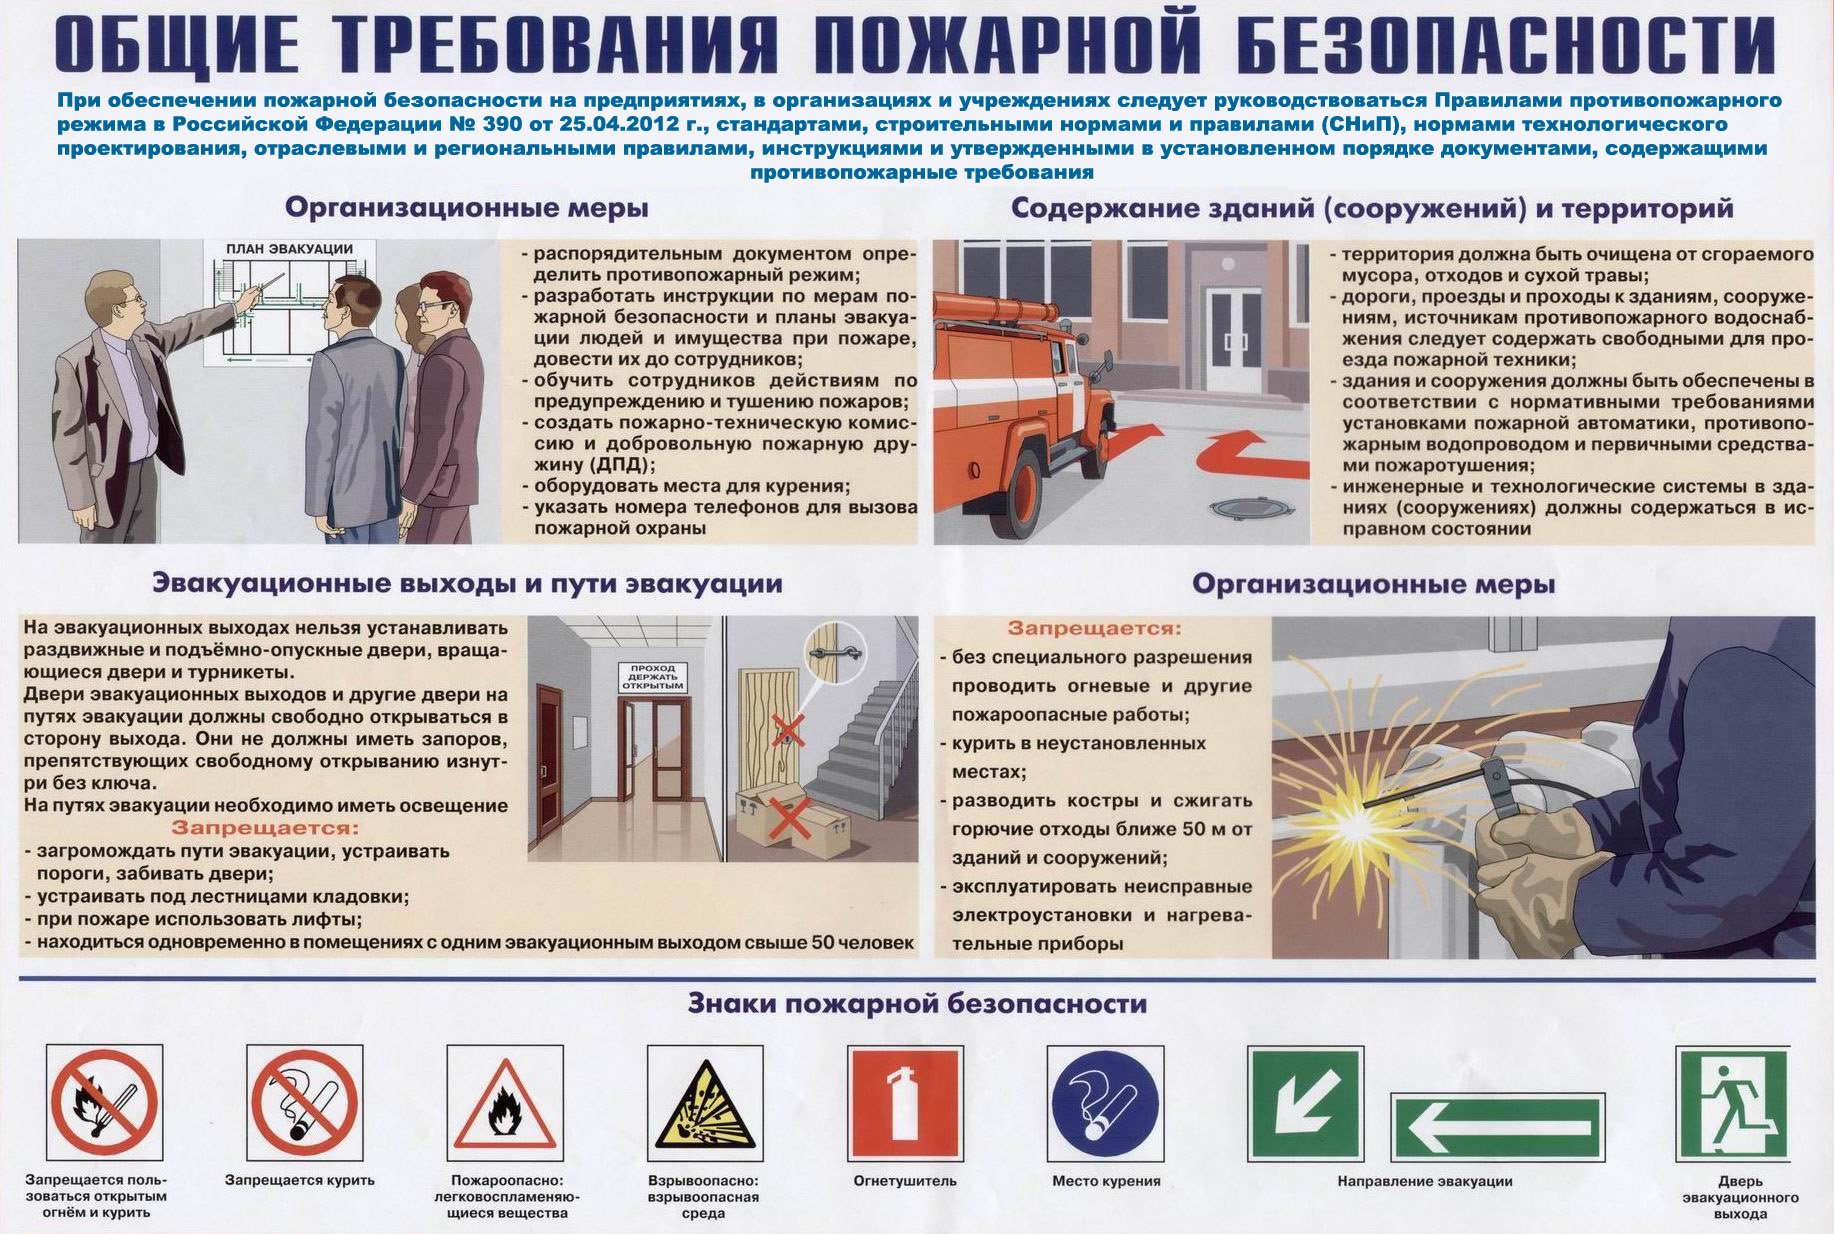 Российским нормам и правилам безопасности